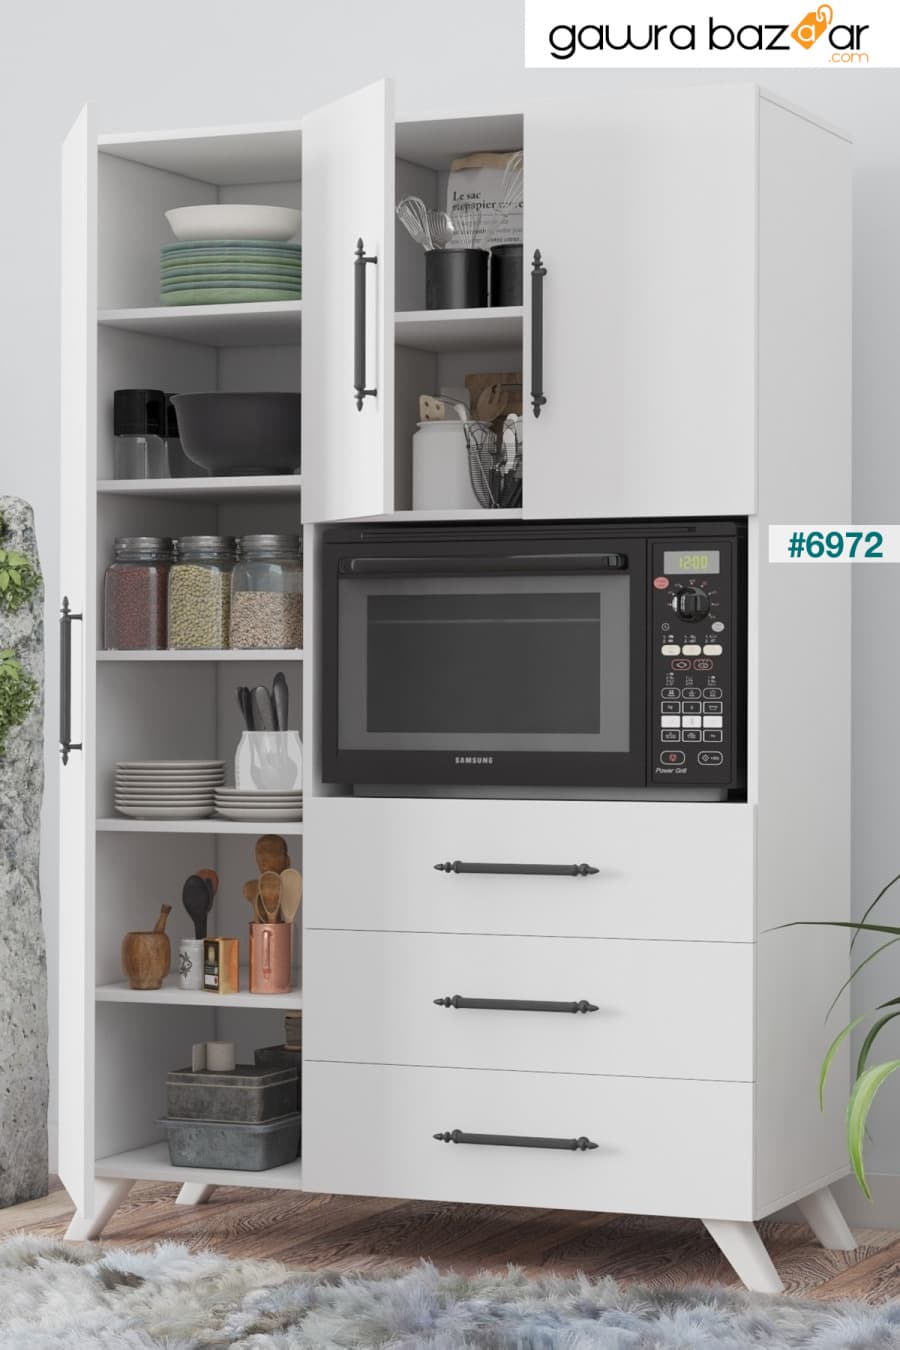 Ae-2074 Aras الأبيض خزانة مطبخ متعددة الأغراض وخزانة حمام ، مخزن ، 3 أبواب ، 3 أدراج ، قسم الفرن Aeka 0